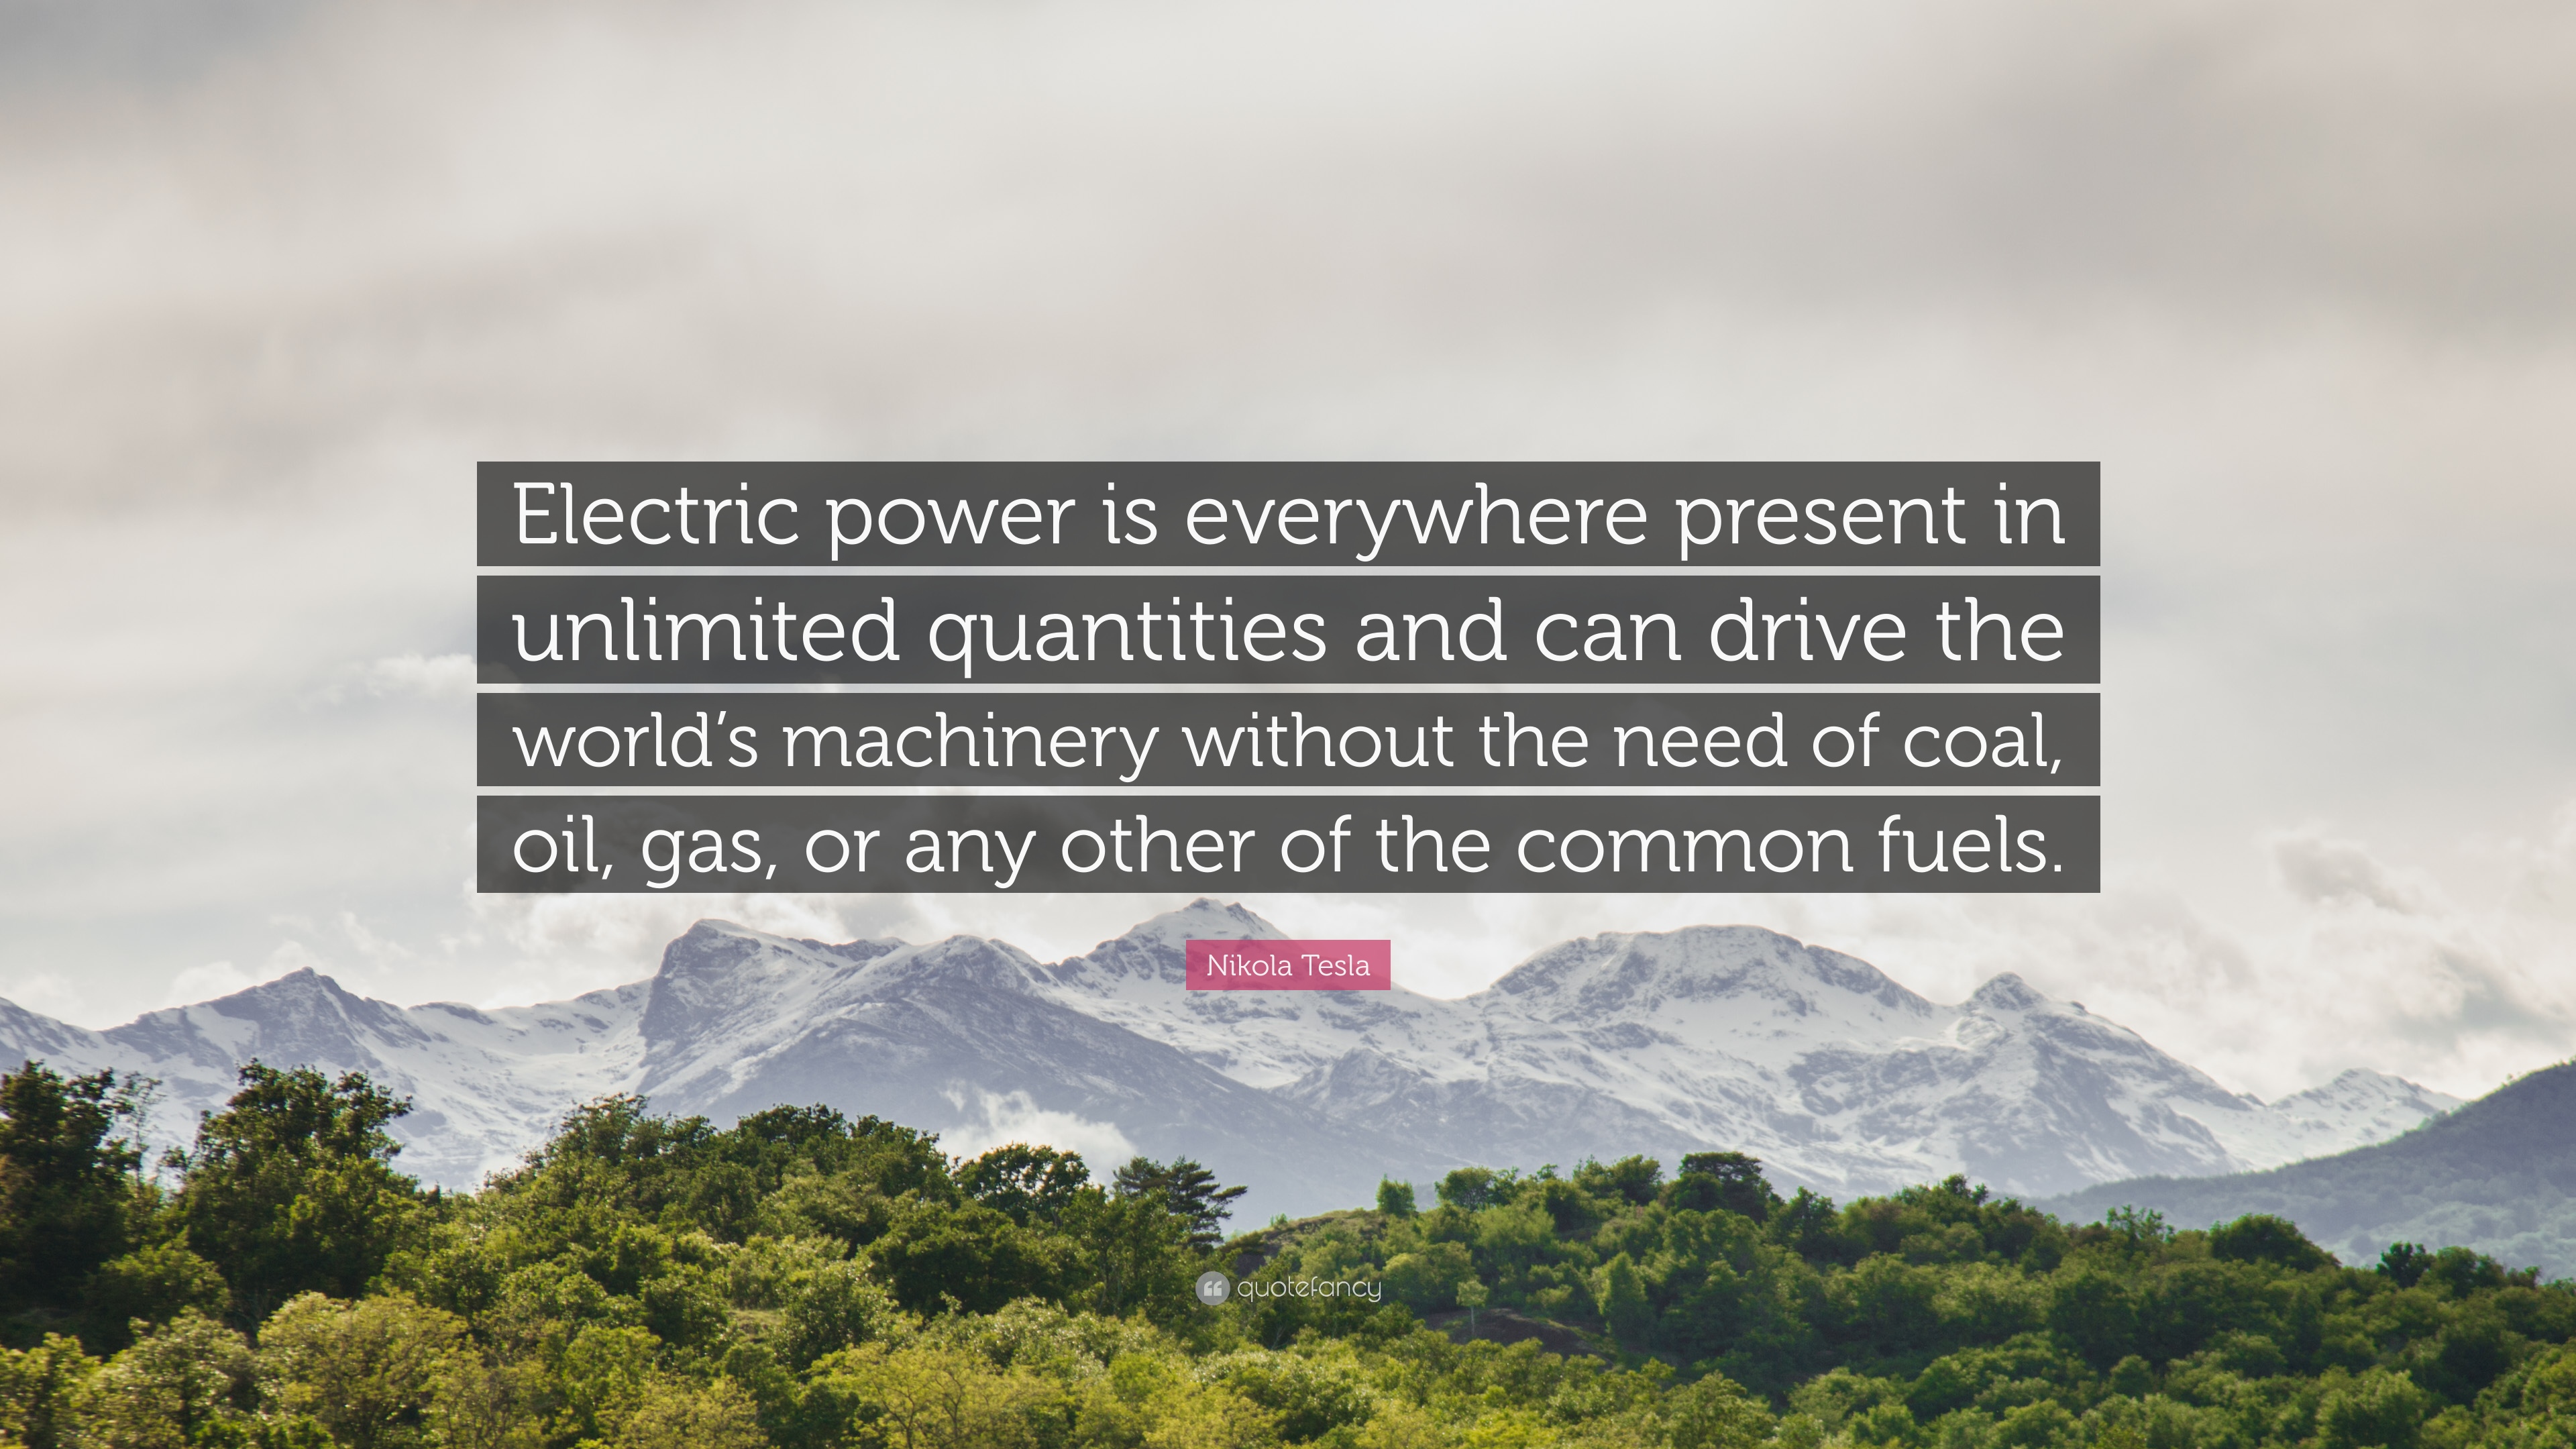 Nikola Tesla Quote: “Electric power is everywhere present